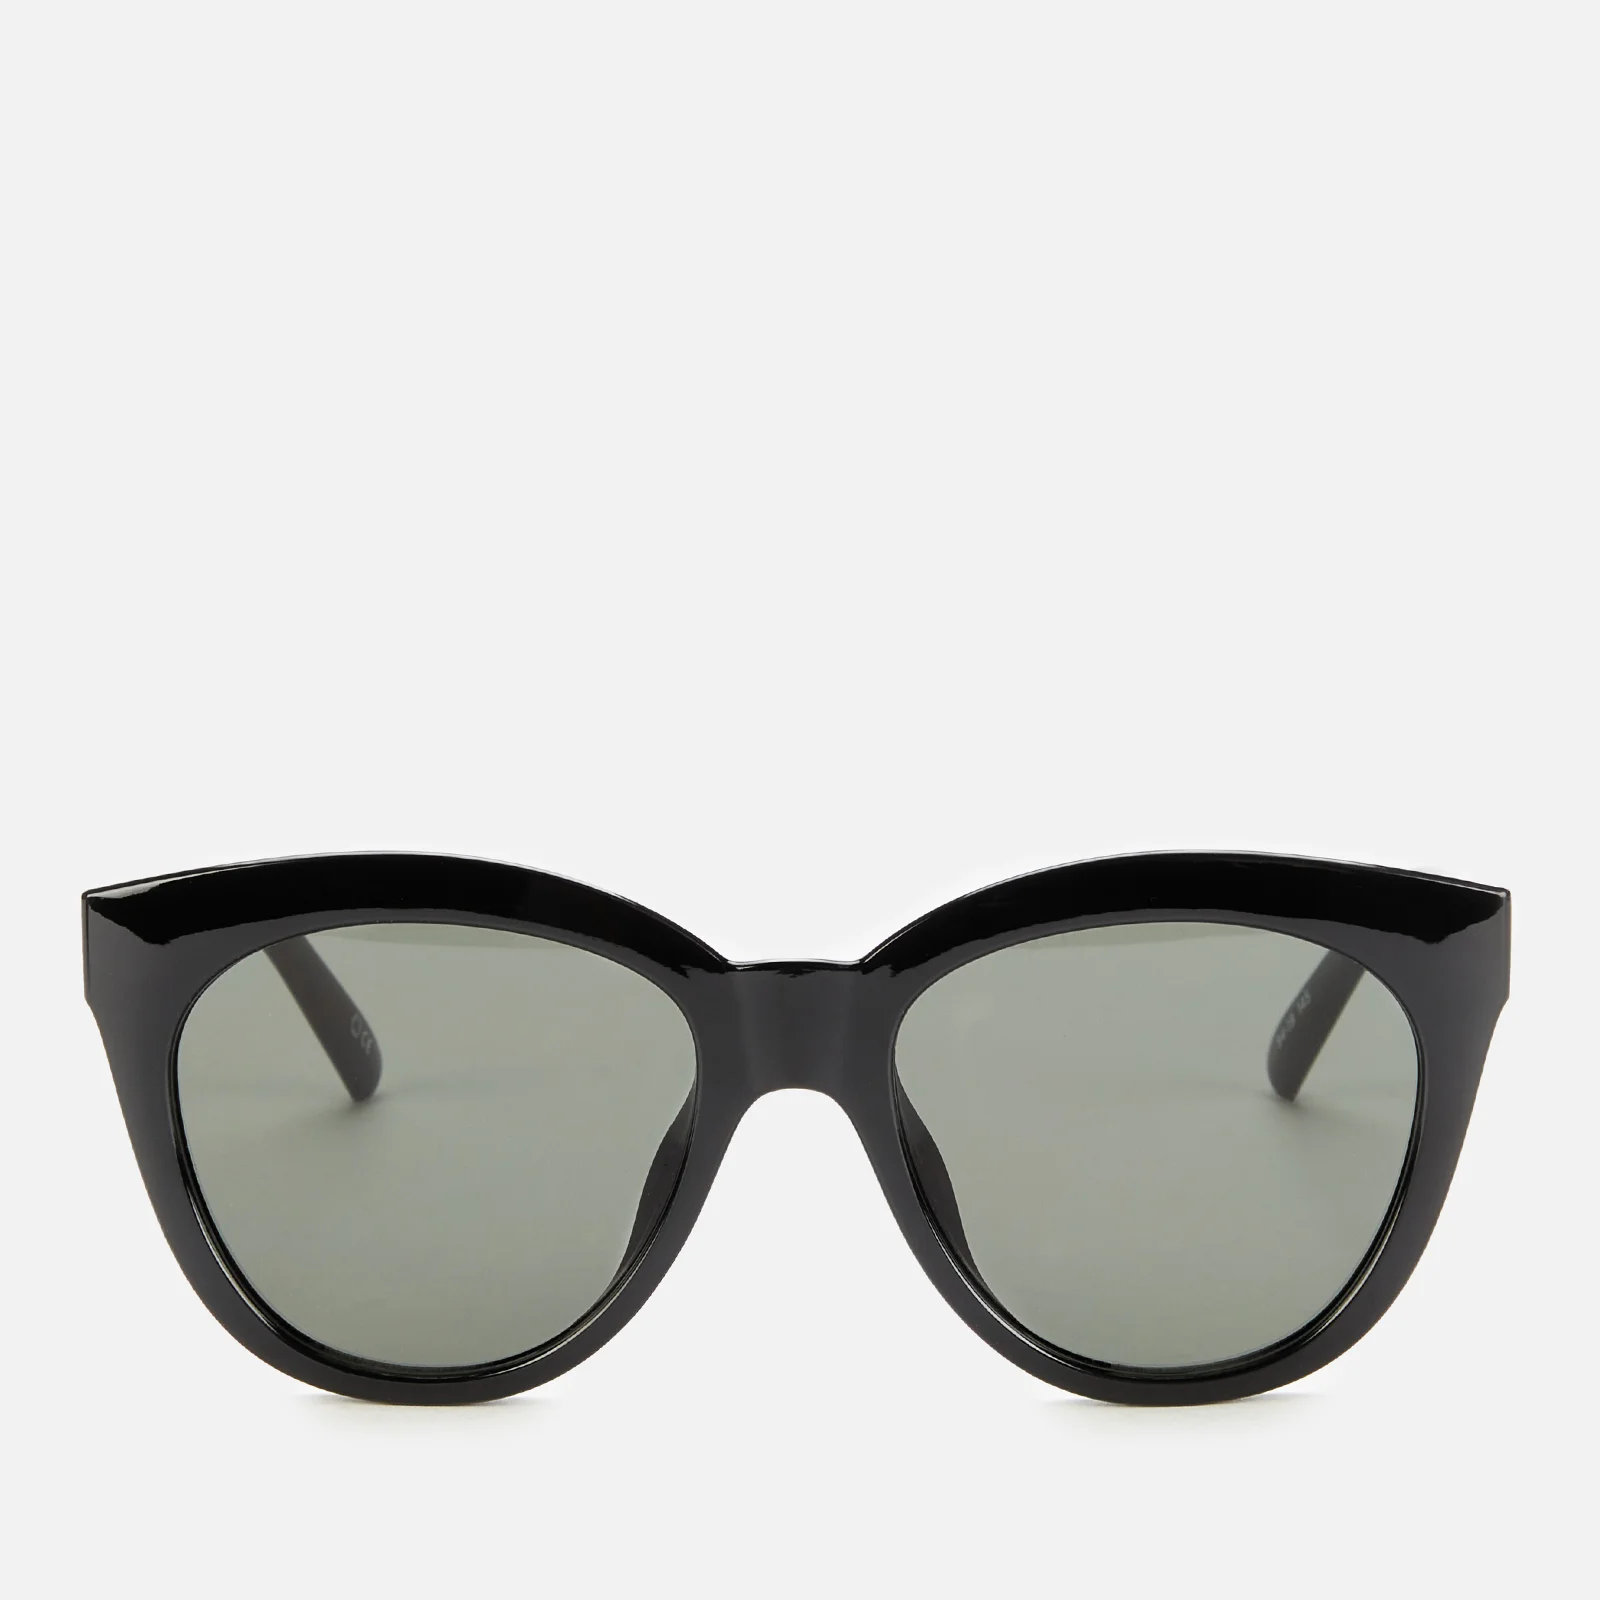 Le Specs Women's Resumption Round Sunglasses - Black Image 1